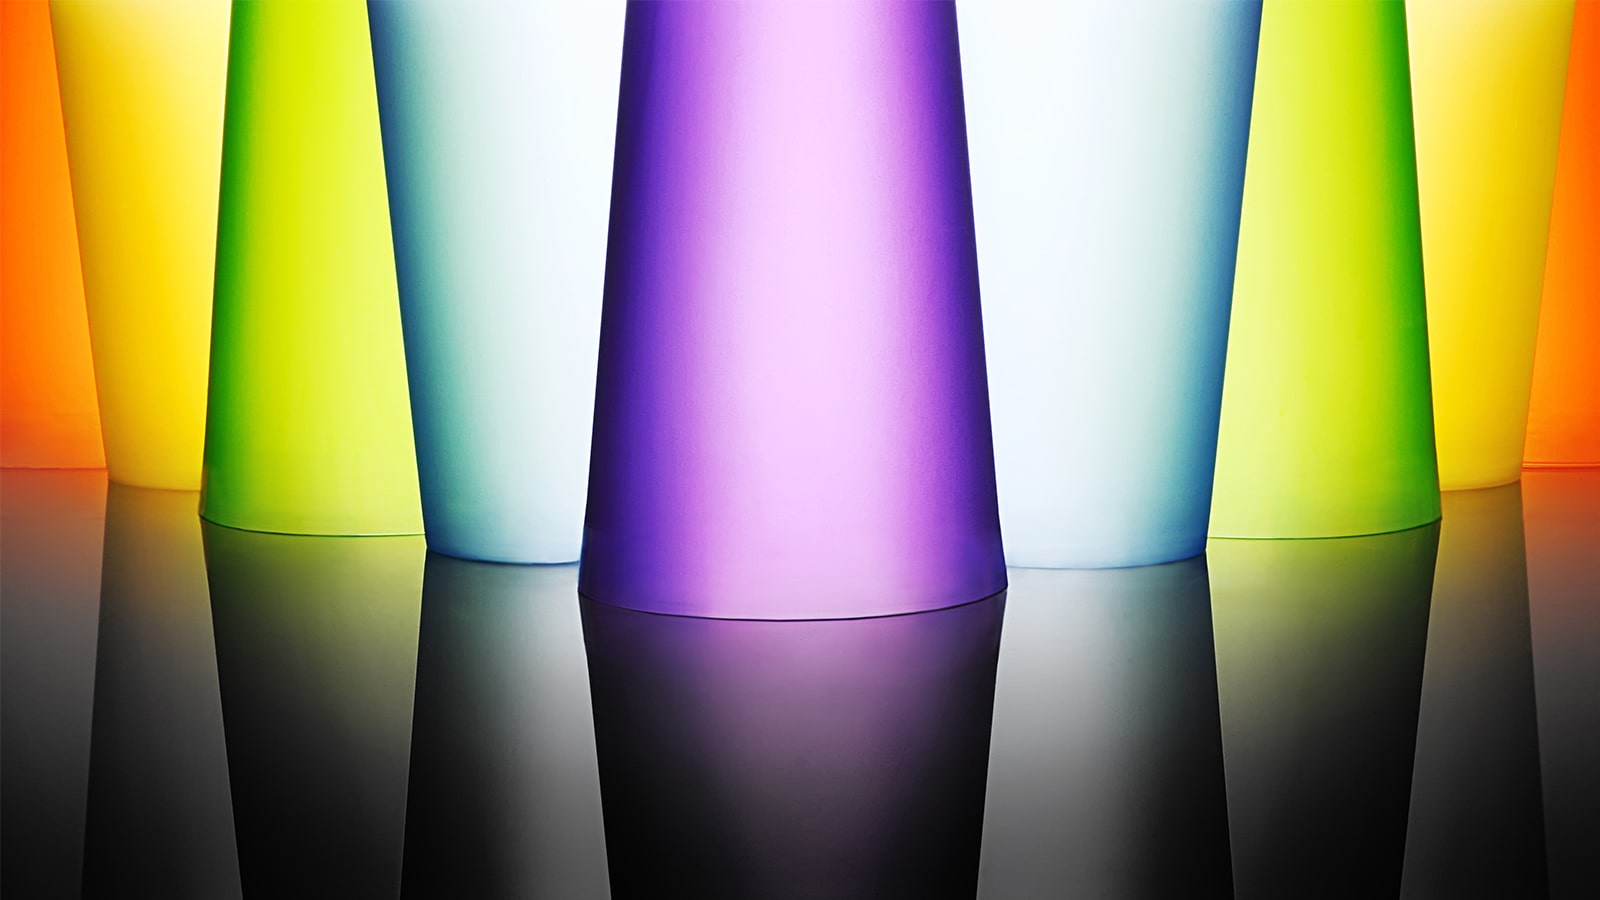 O imagine aprinsa si colorata a cupelor din sticla.